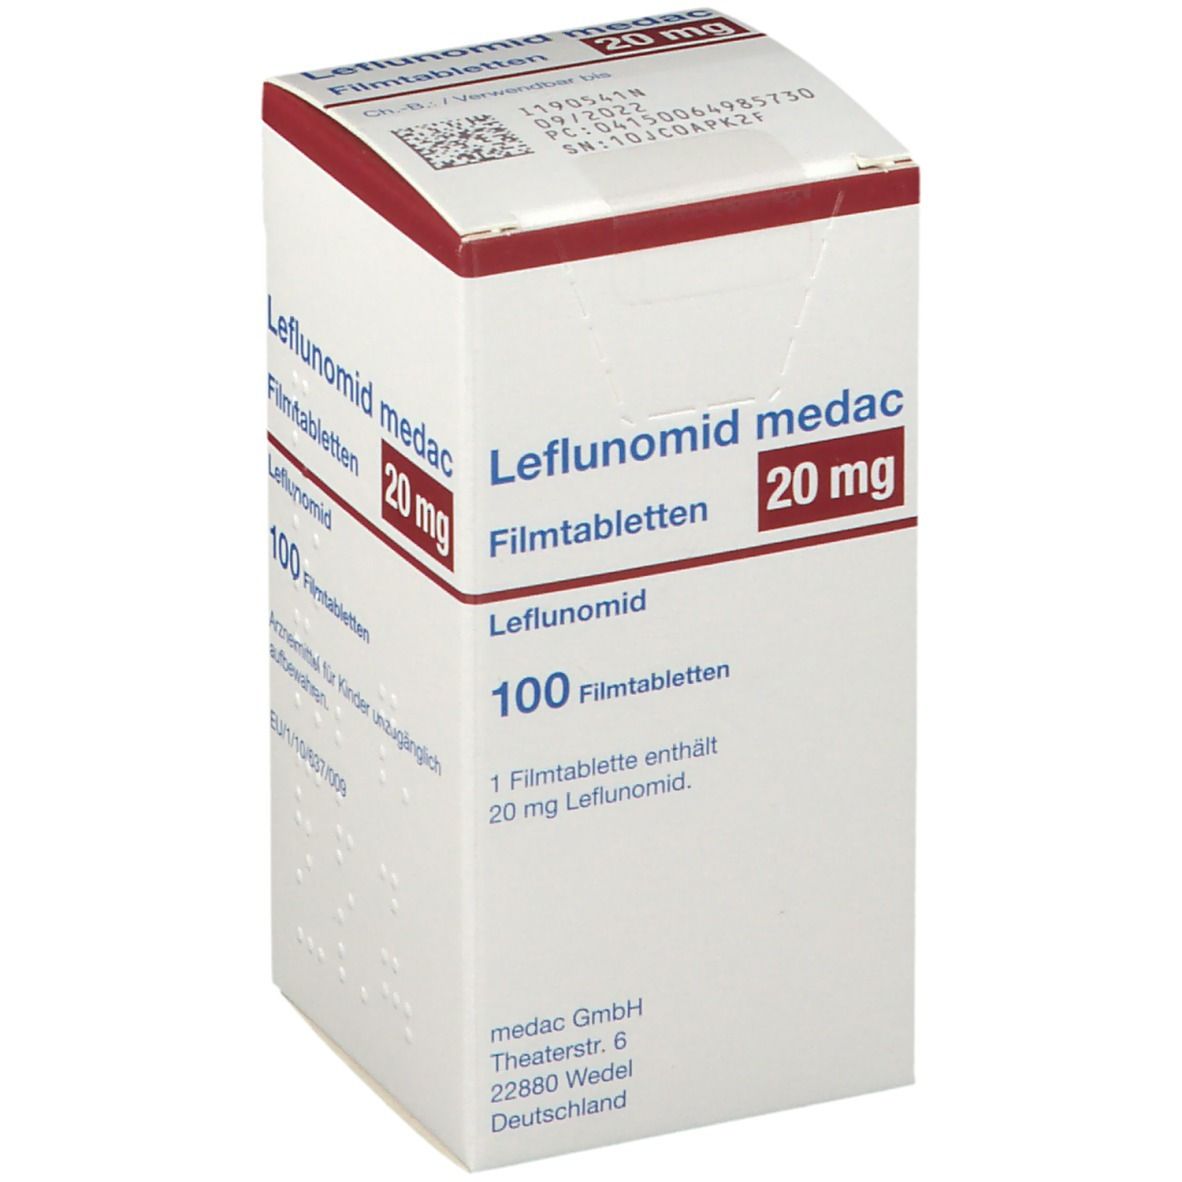 Leflunomid medac 20 mg